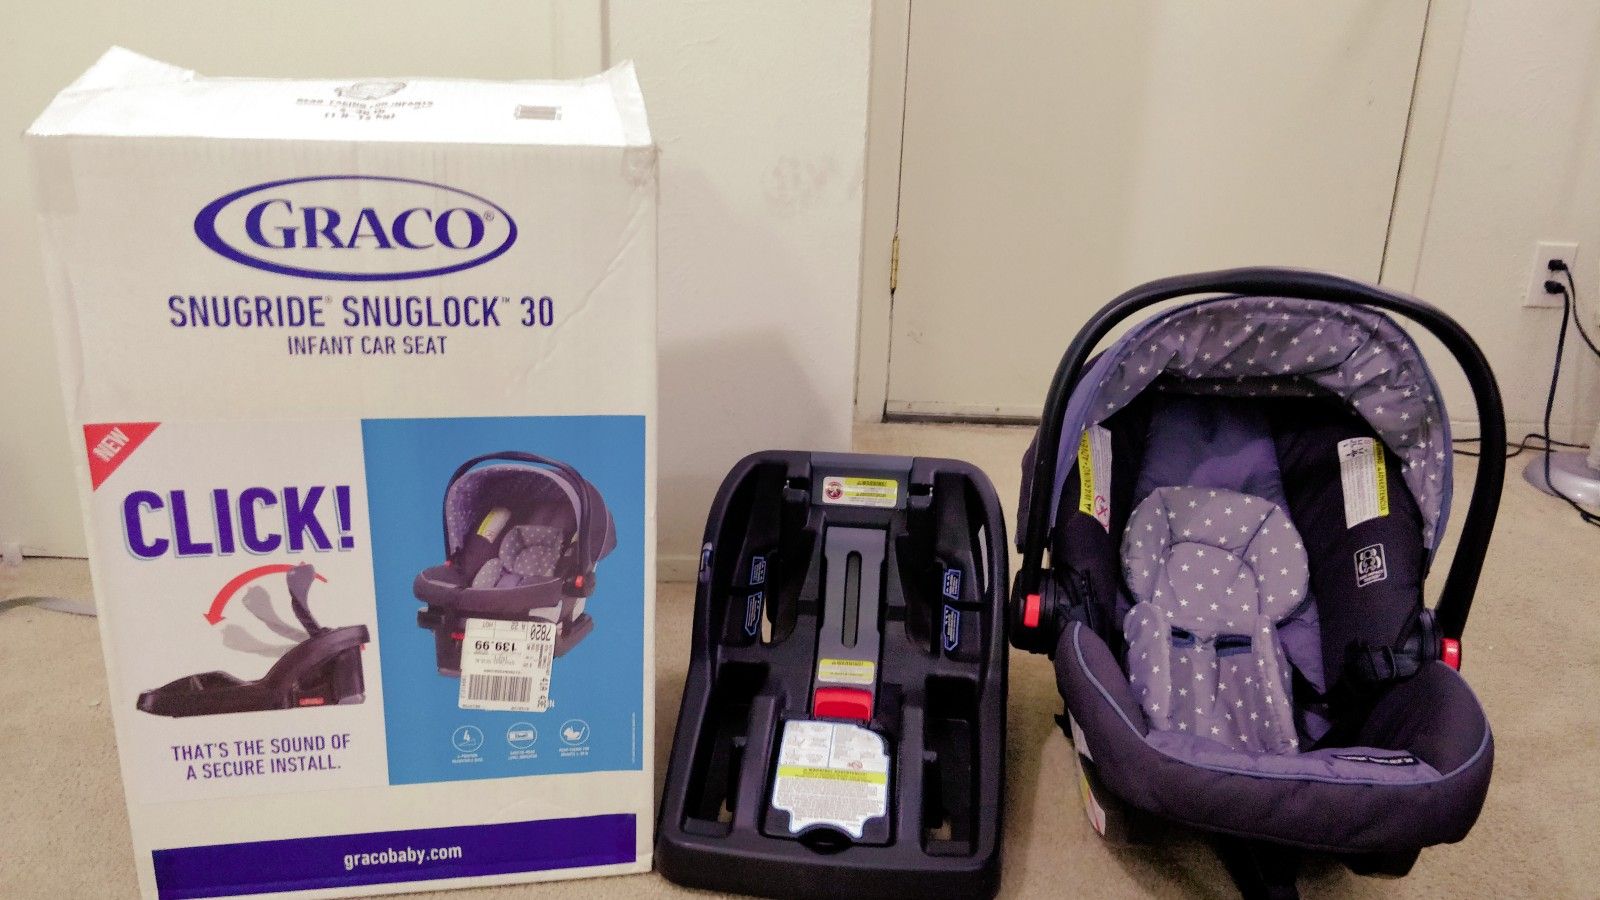 Graco Snugride Snuglock 30 (Infant car seat) in excellent condition